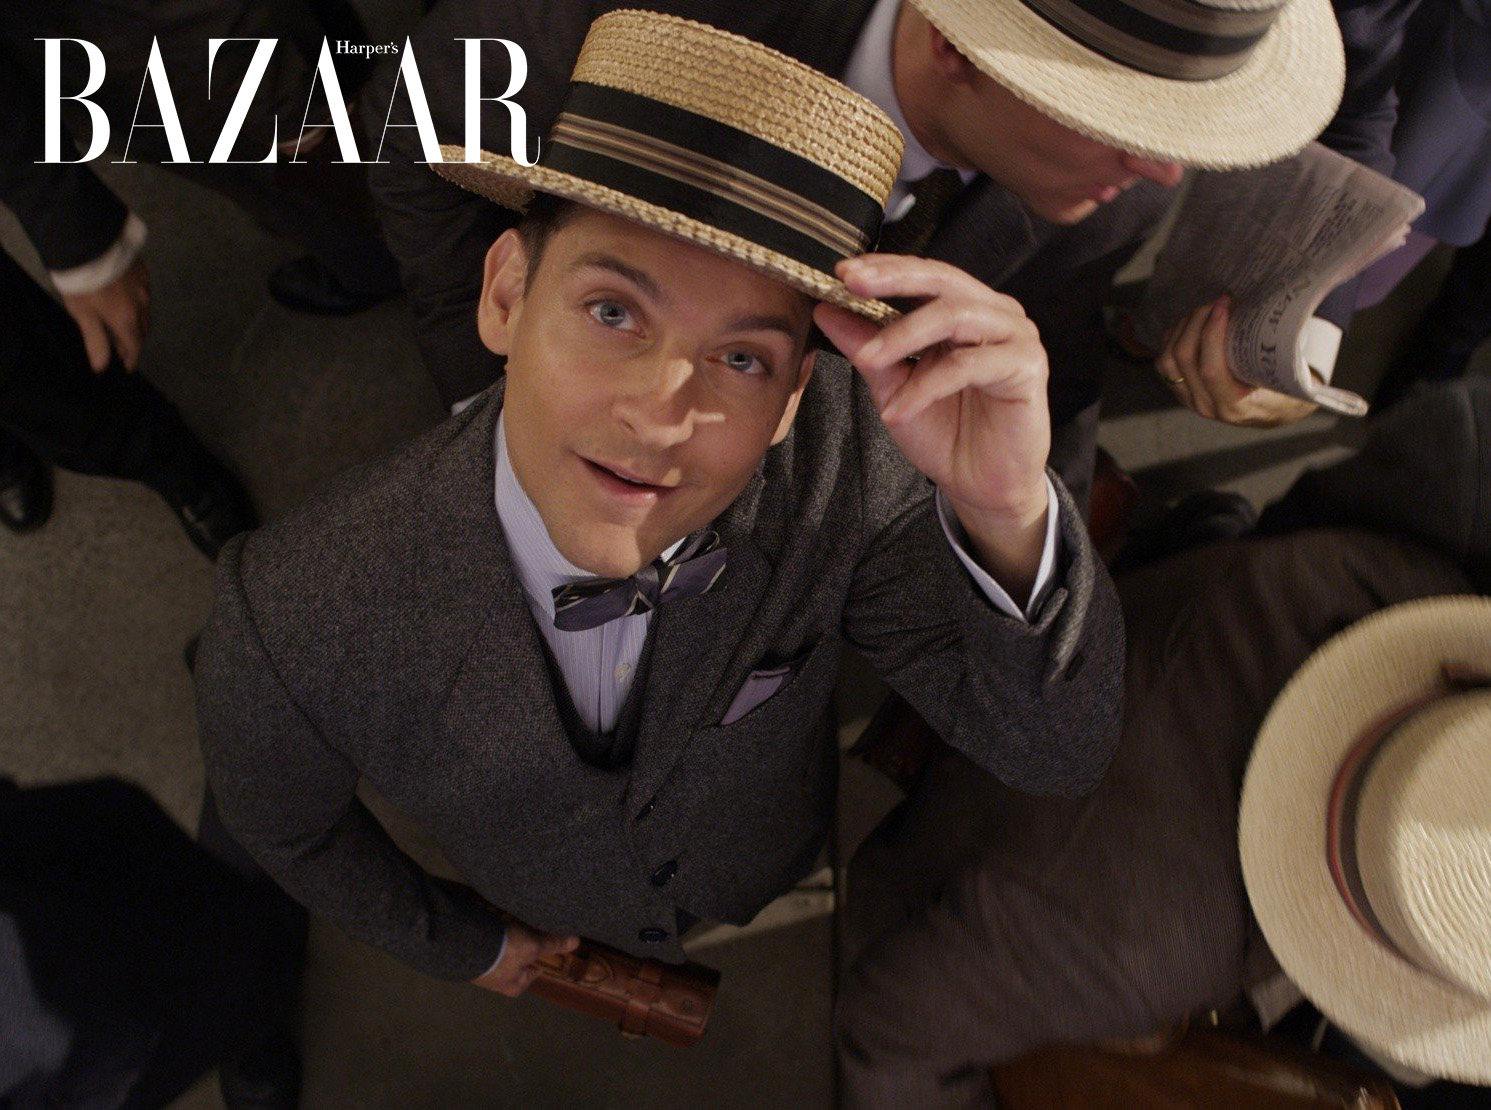 Harper's Bazaar_các nam chính trong phim cuả Baz Luhrmann_07